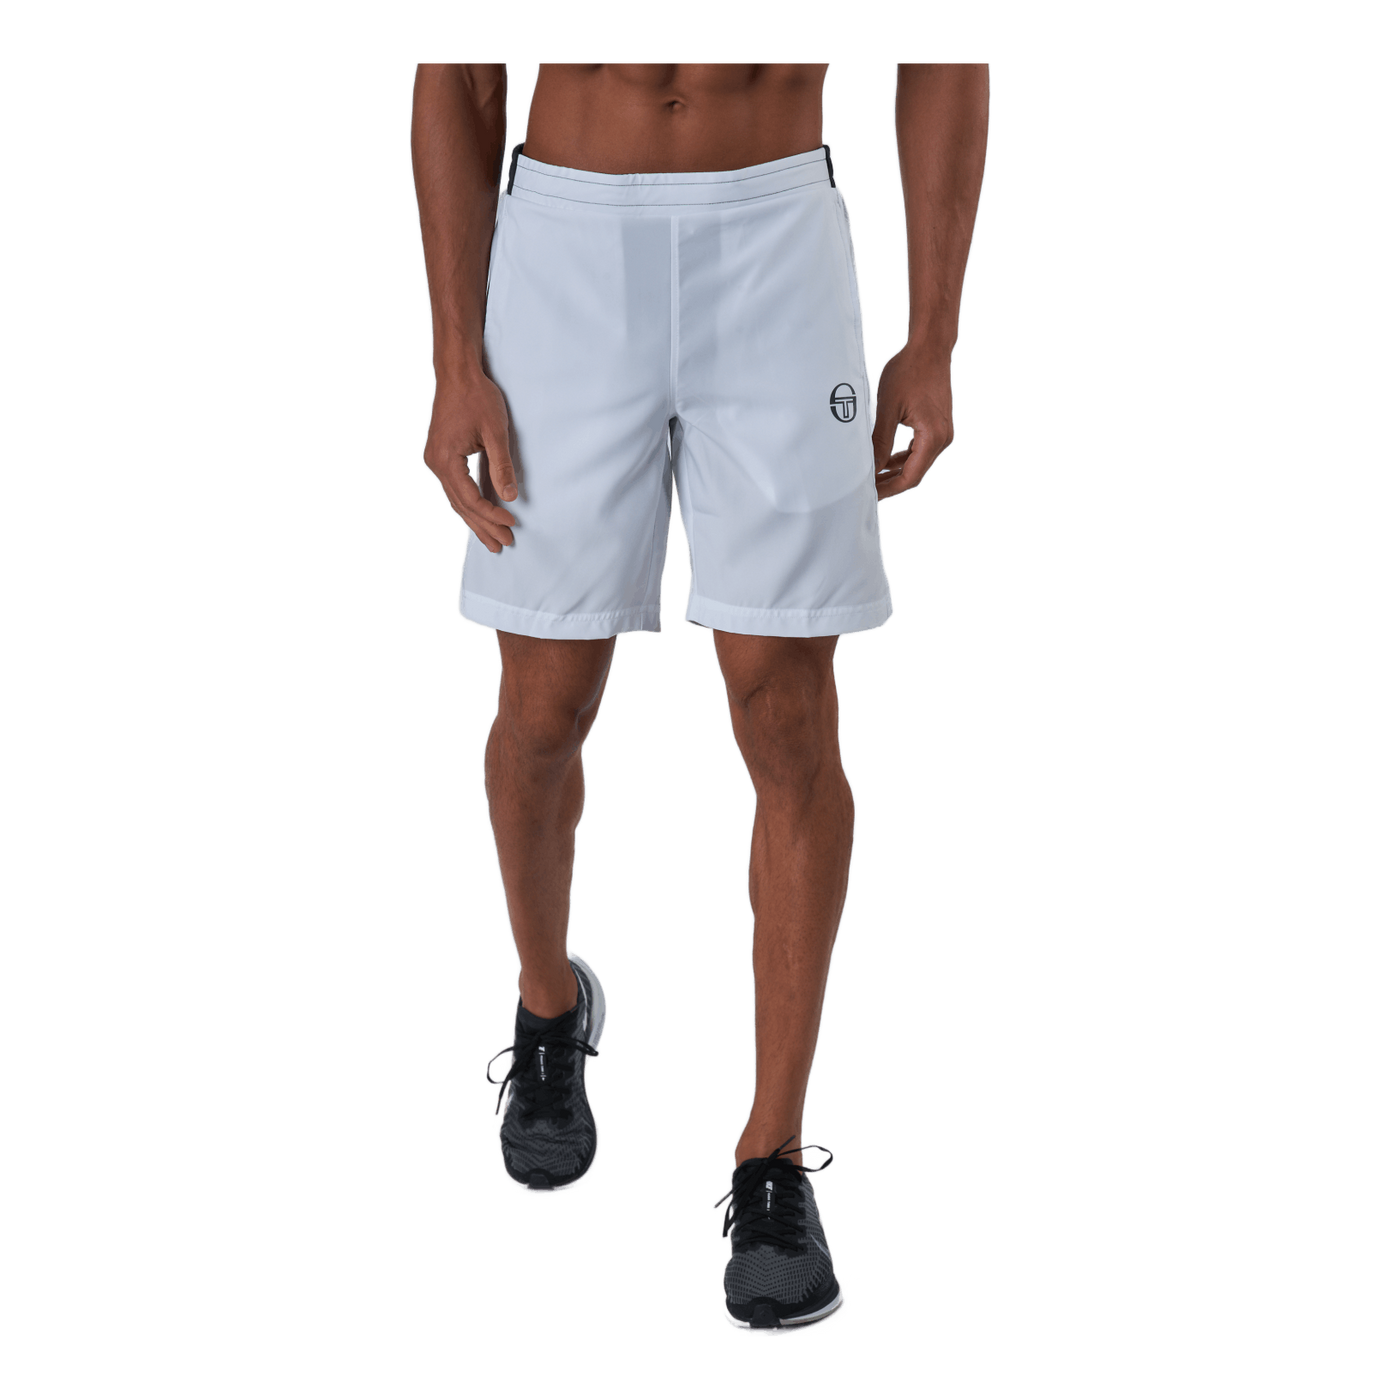 Club Tech Shorts White/navy